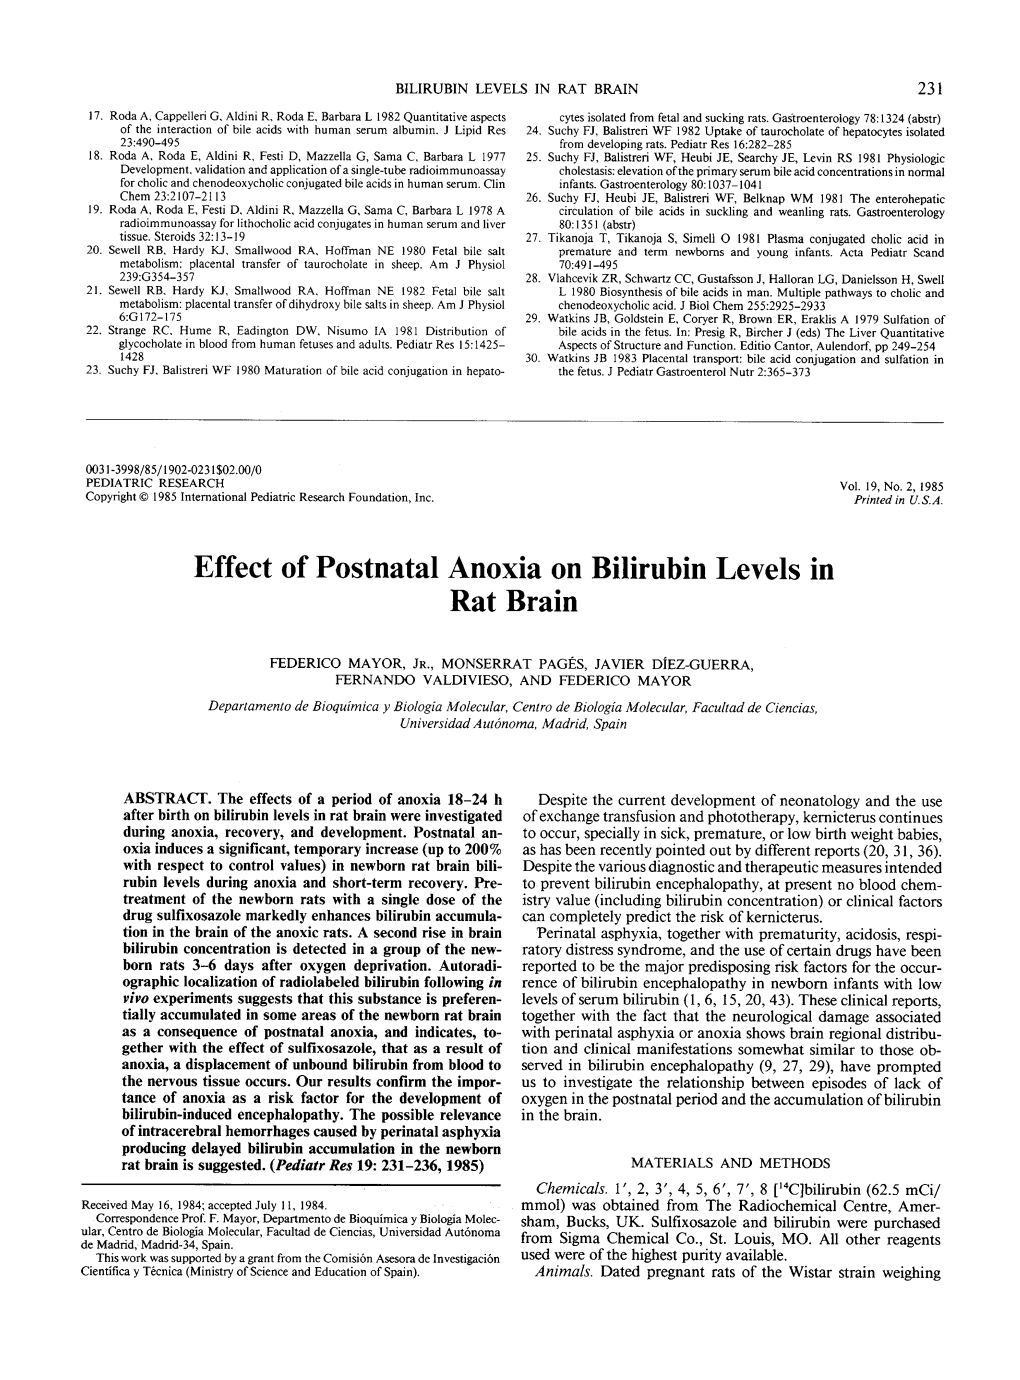 Effect of Postnatal Anoxia on Bilirubin Levels in Rat Brain